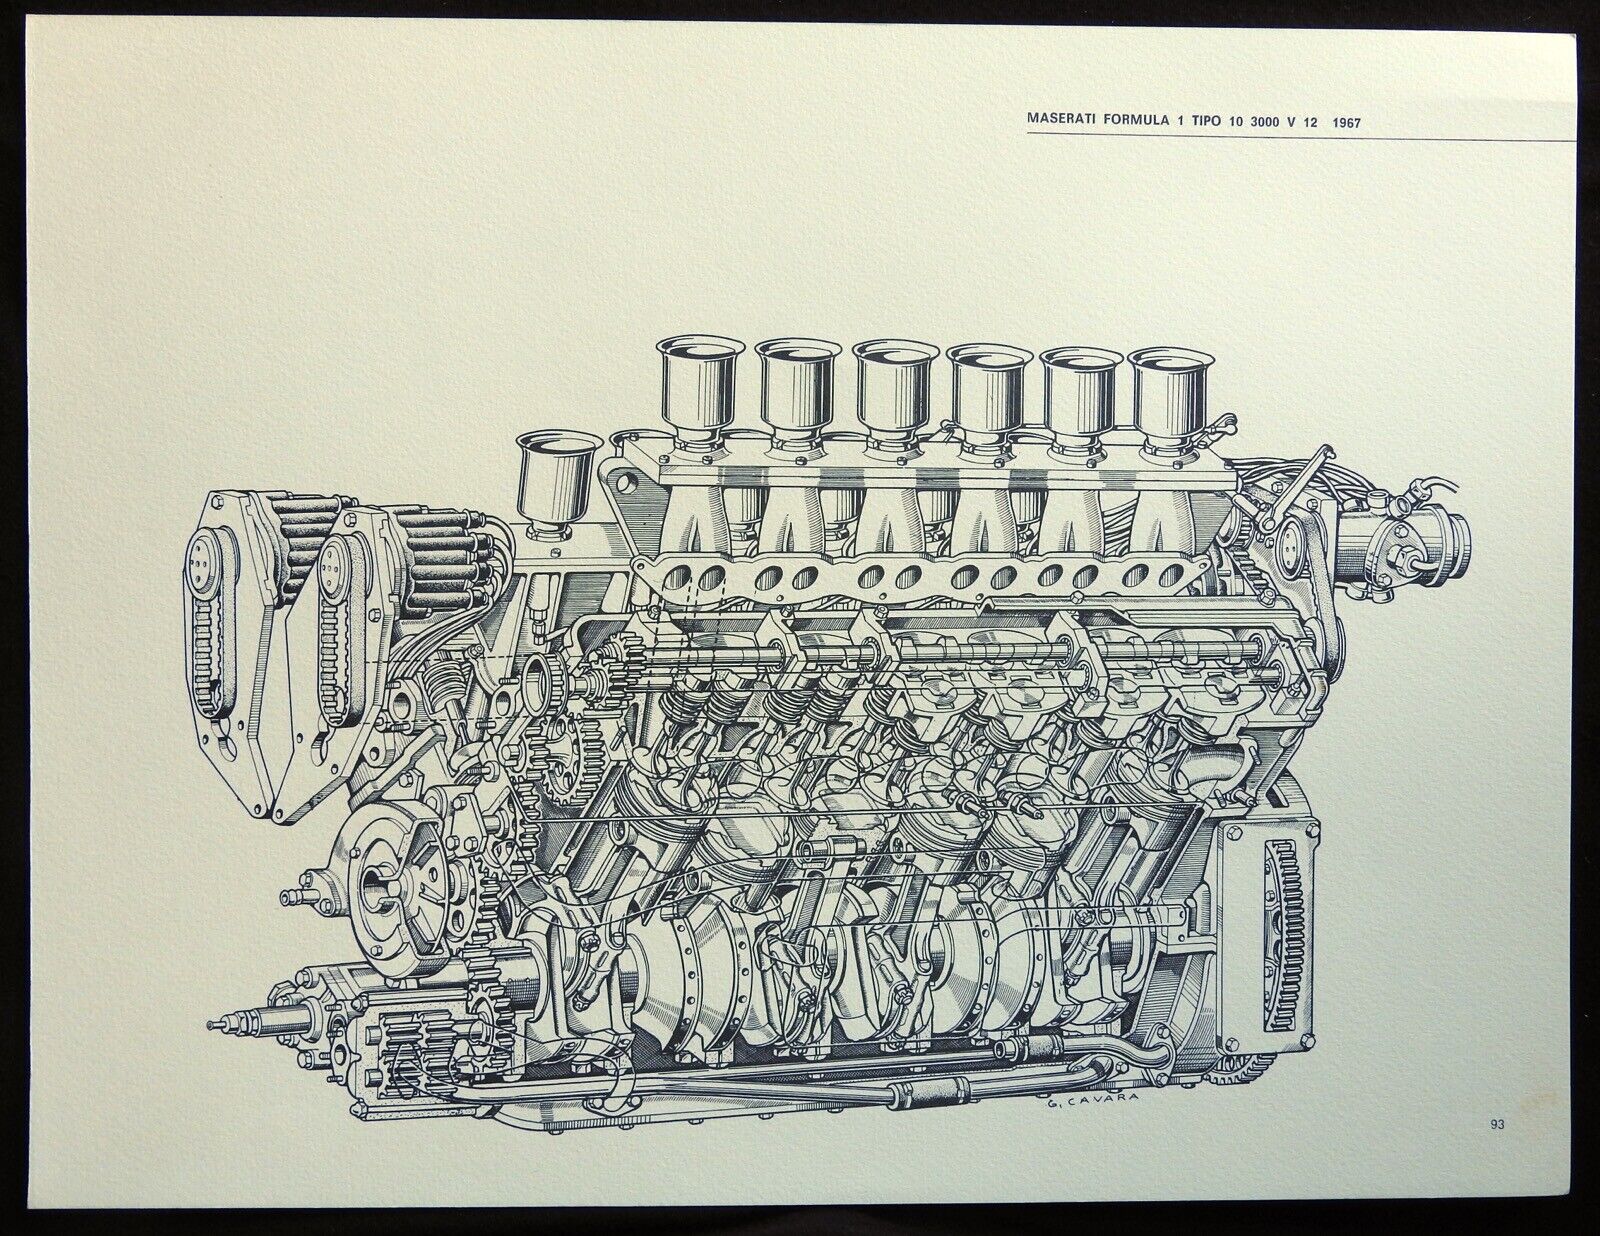 1967 MASERATI Formula 1 Tipo 10 3000 V12 Race Engine G. CAVARA Cutaway Art Print